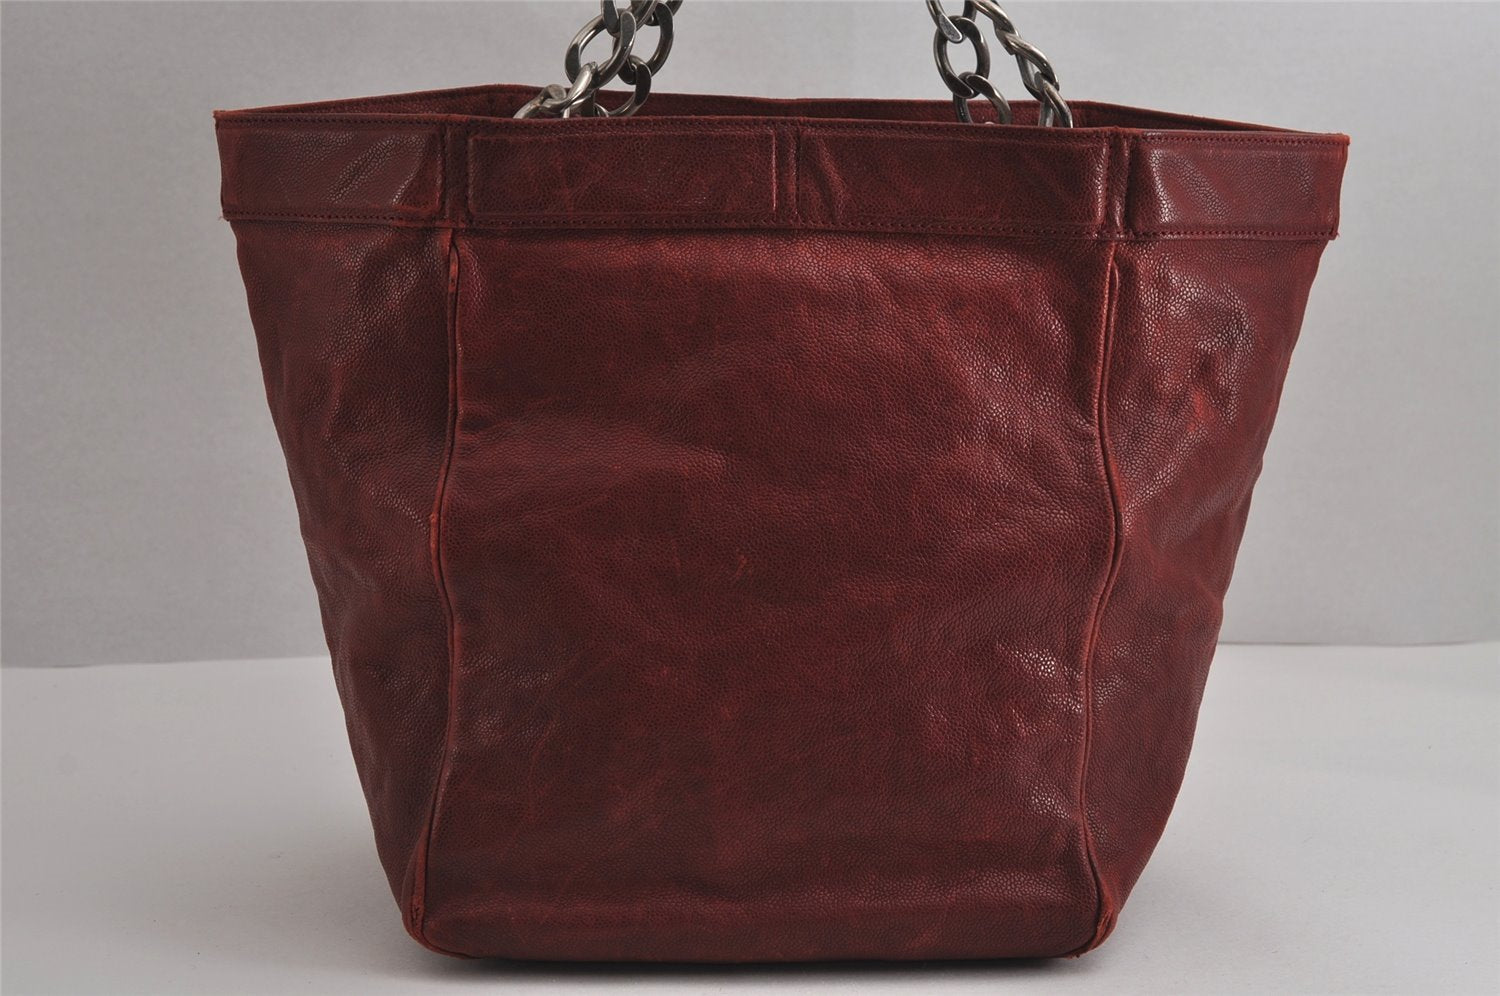 Authentic CHANEL Caviar Skin CC Logo Chain Shoulder Tote Bag Bordeaux Red 6943J